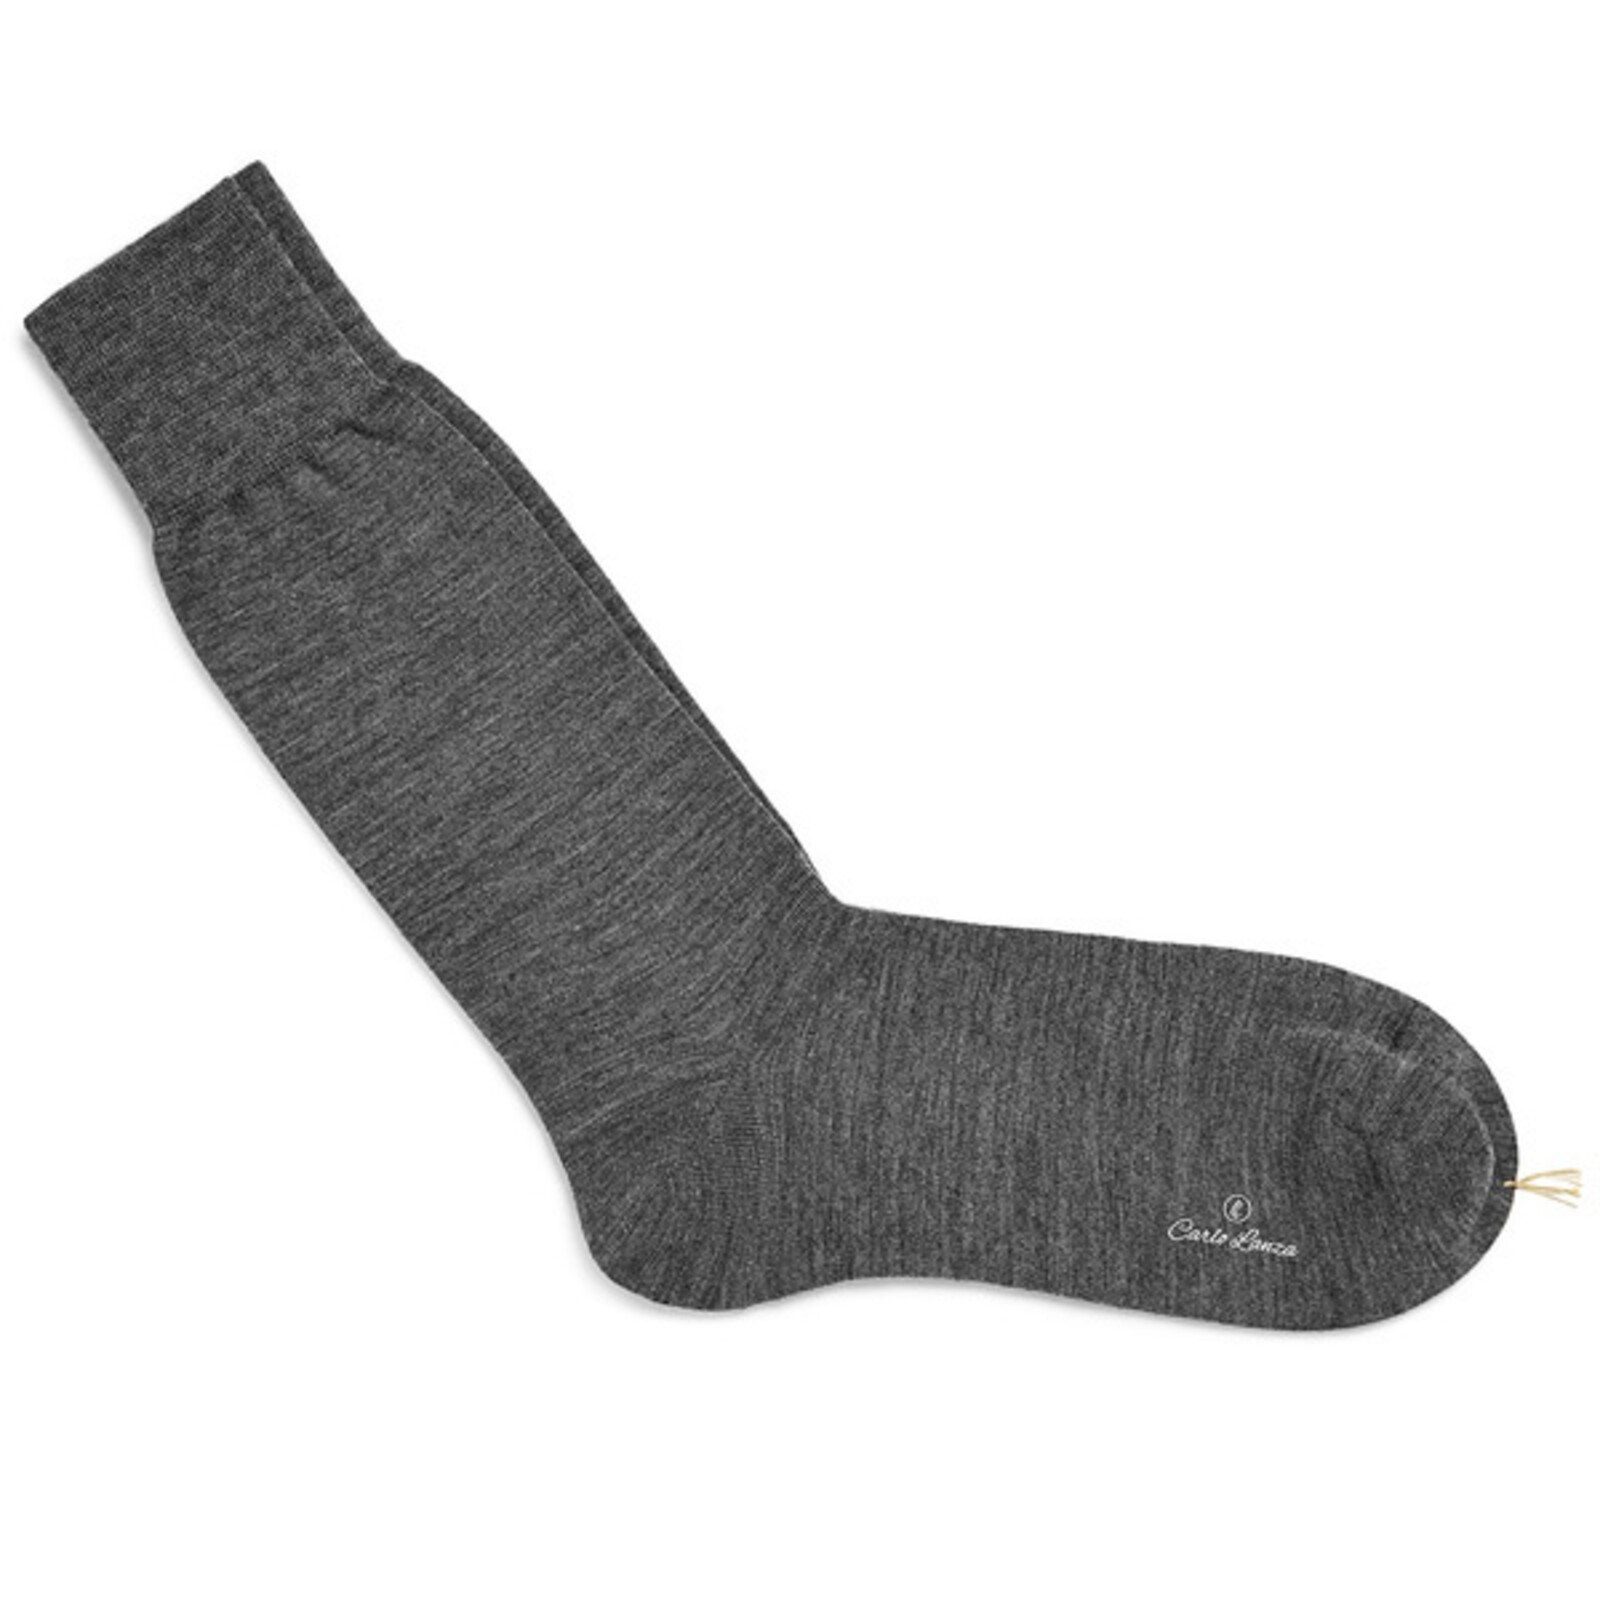 Carlo Lanza Light grey wool socks